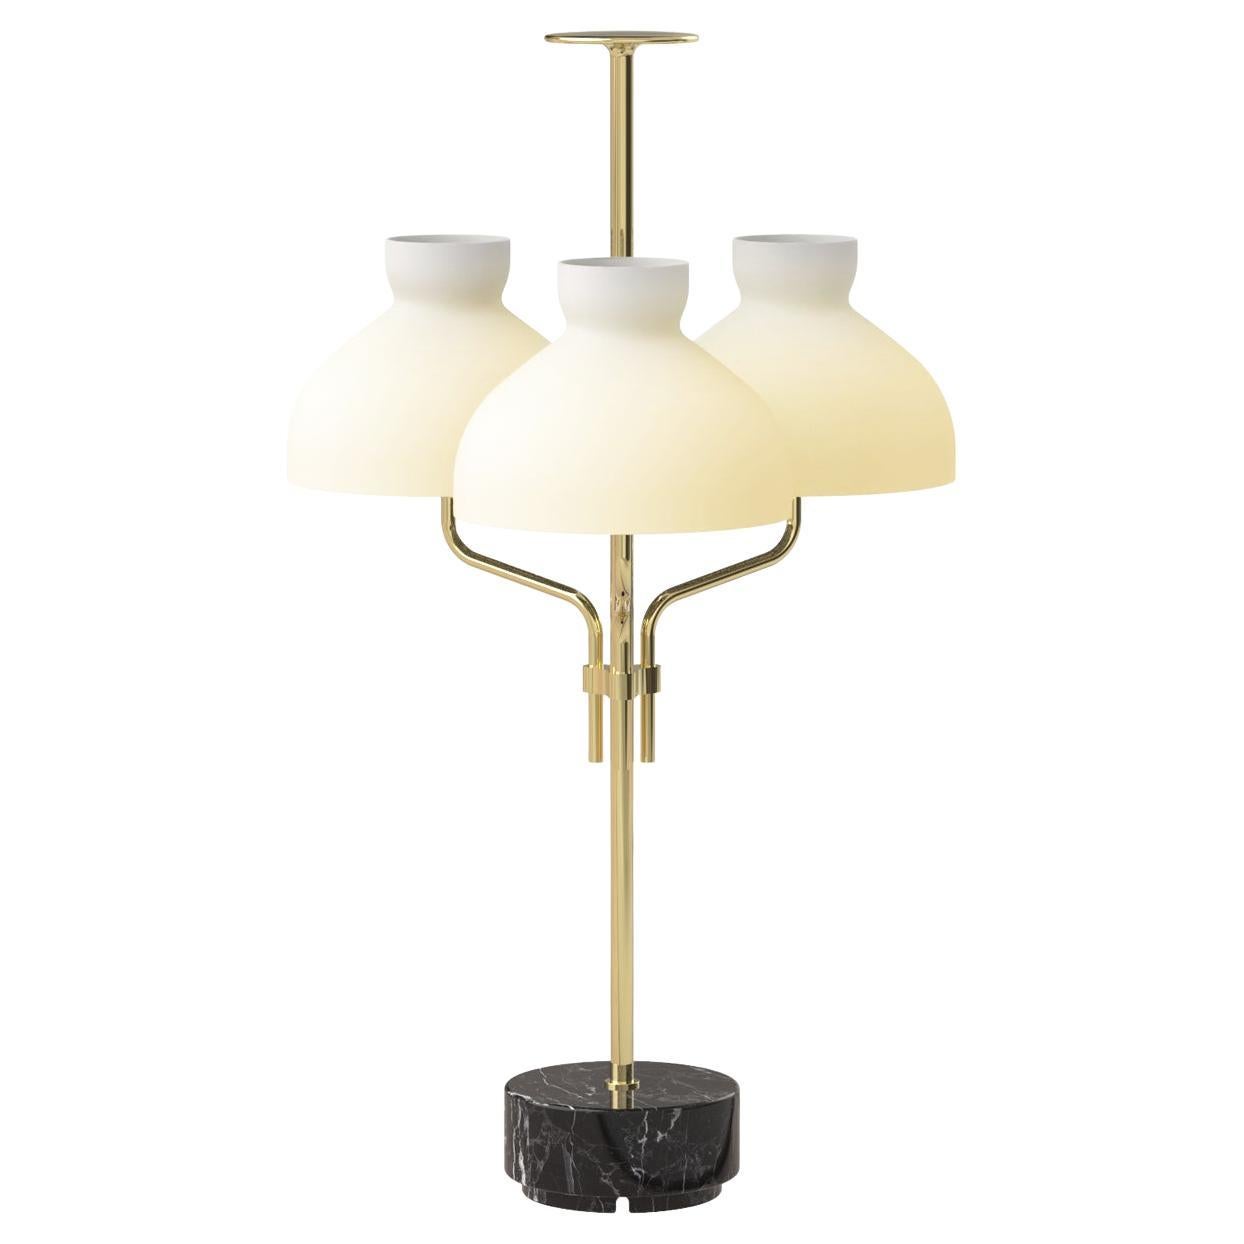 Ignazio Gardella 'Arenzano Tre Fiamme' Table Lamp in Black Marble and Brass For Sale